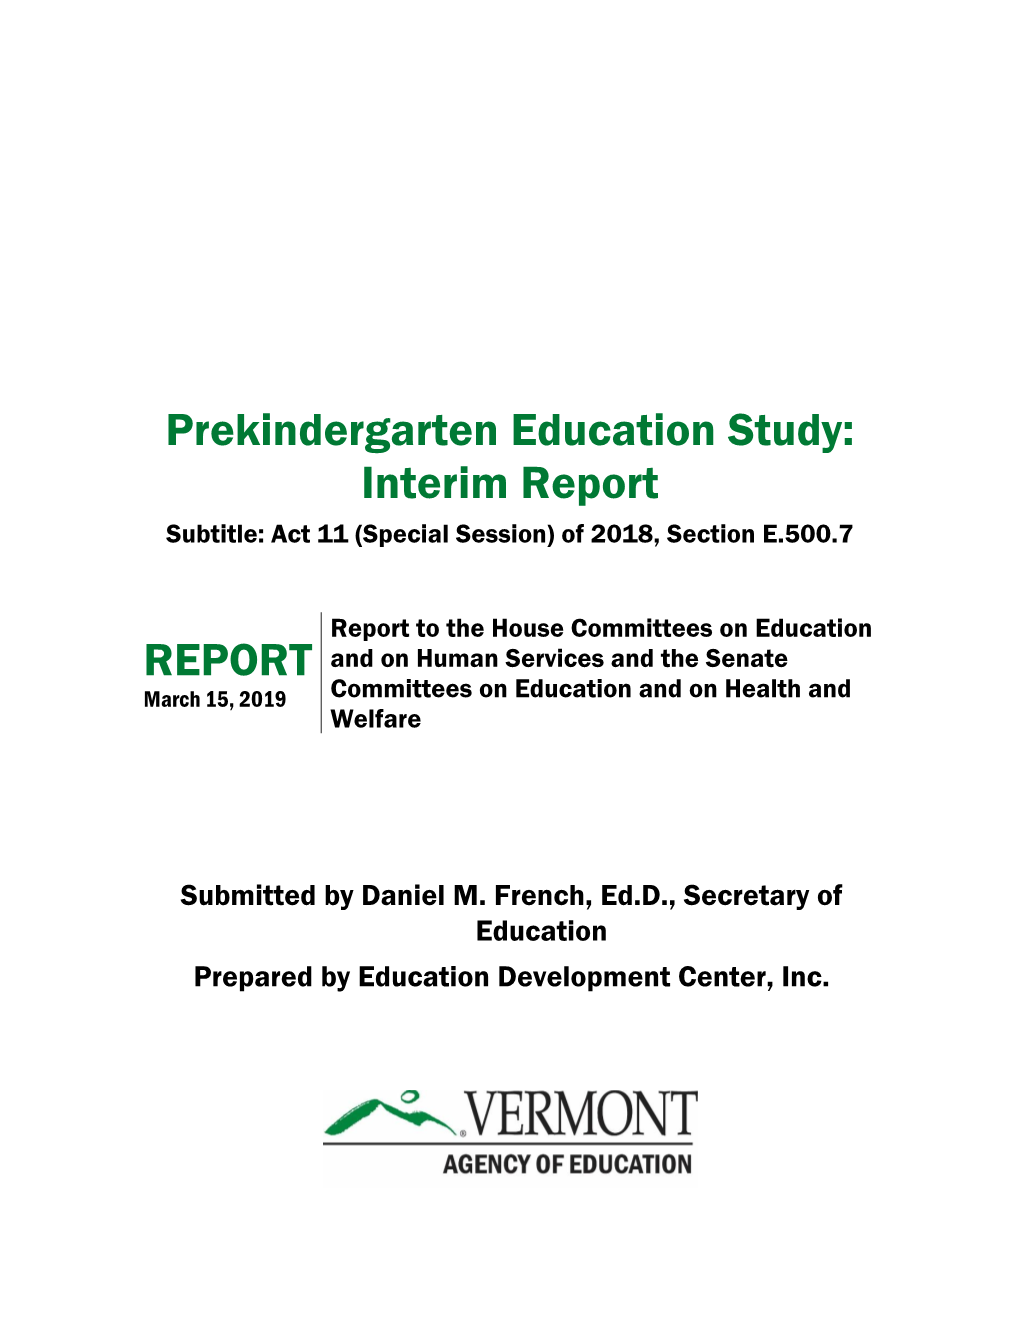 Prekindergarten Education Study: Interim Report Subtitle: Act 11 (Special Session) of 2018, Section E.500.7